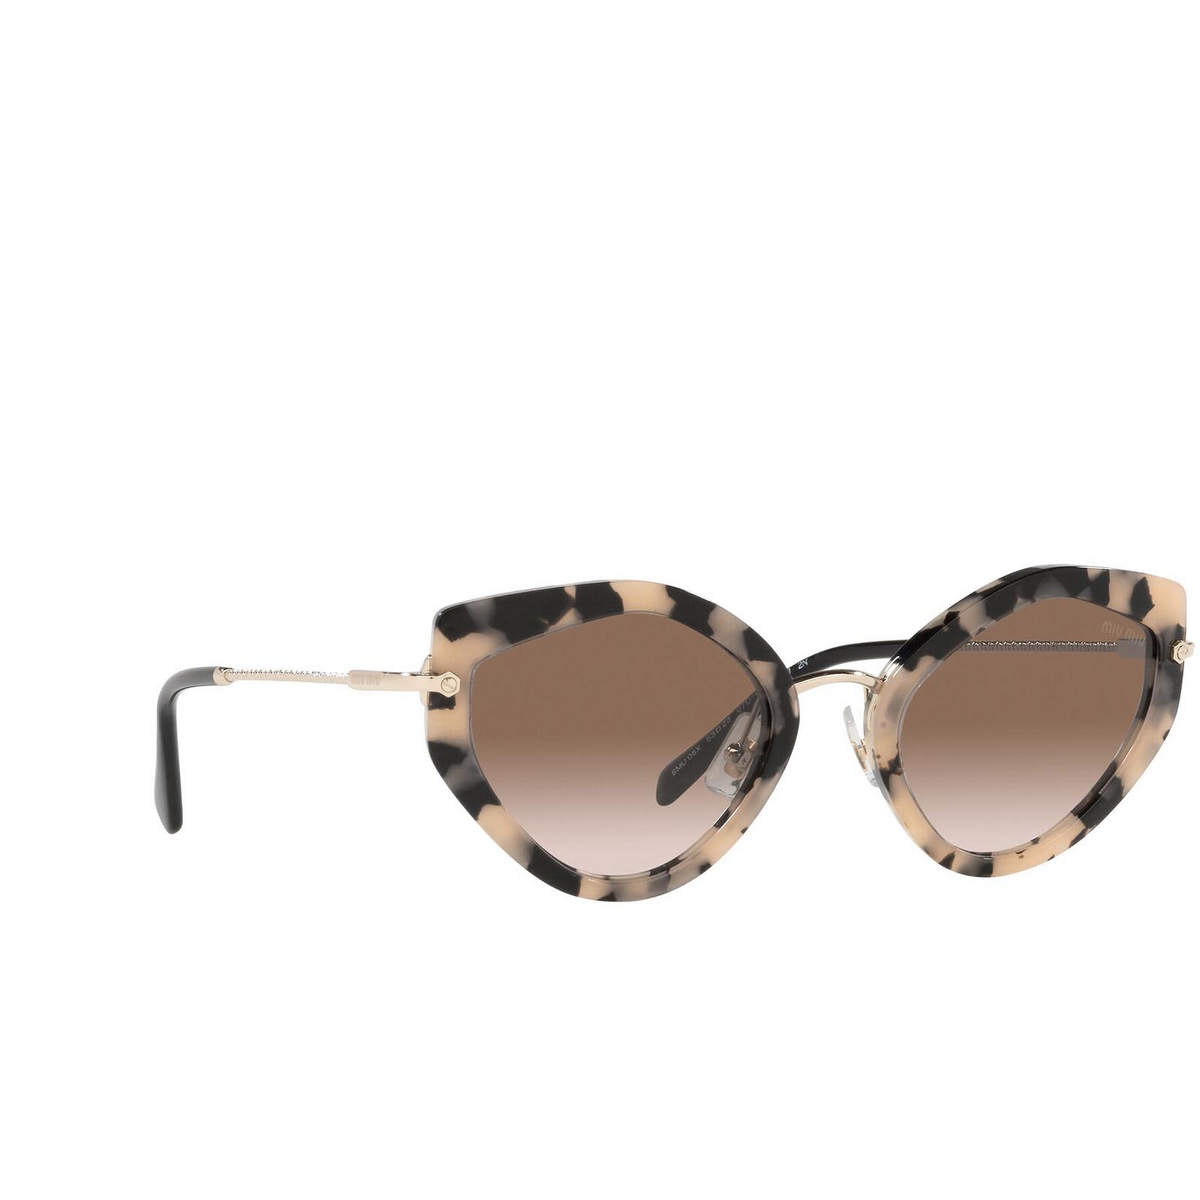 Miu Miu® Butterfly Sunglasses: MU 08XS color Havana Pink 07D0A6 - three-quarters view.